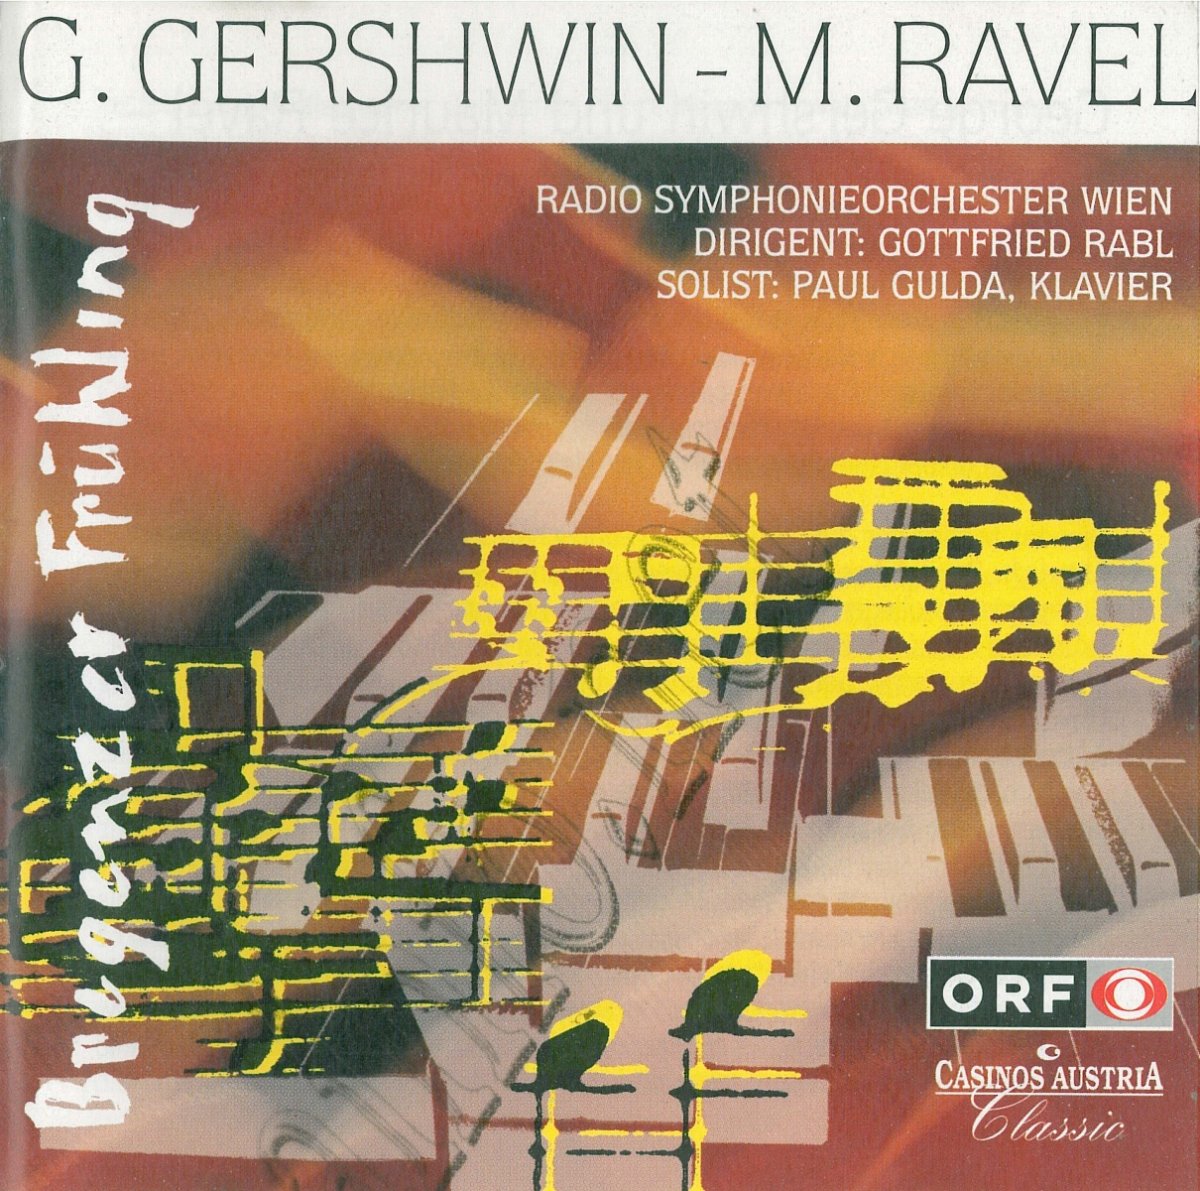 George Gershwin - Maurice Ravel - cliquer ici